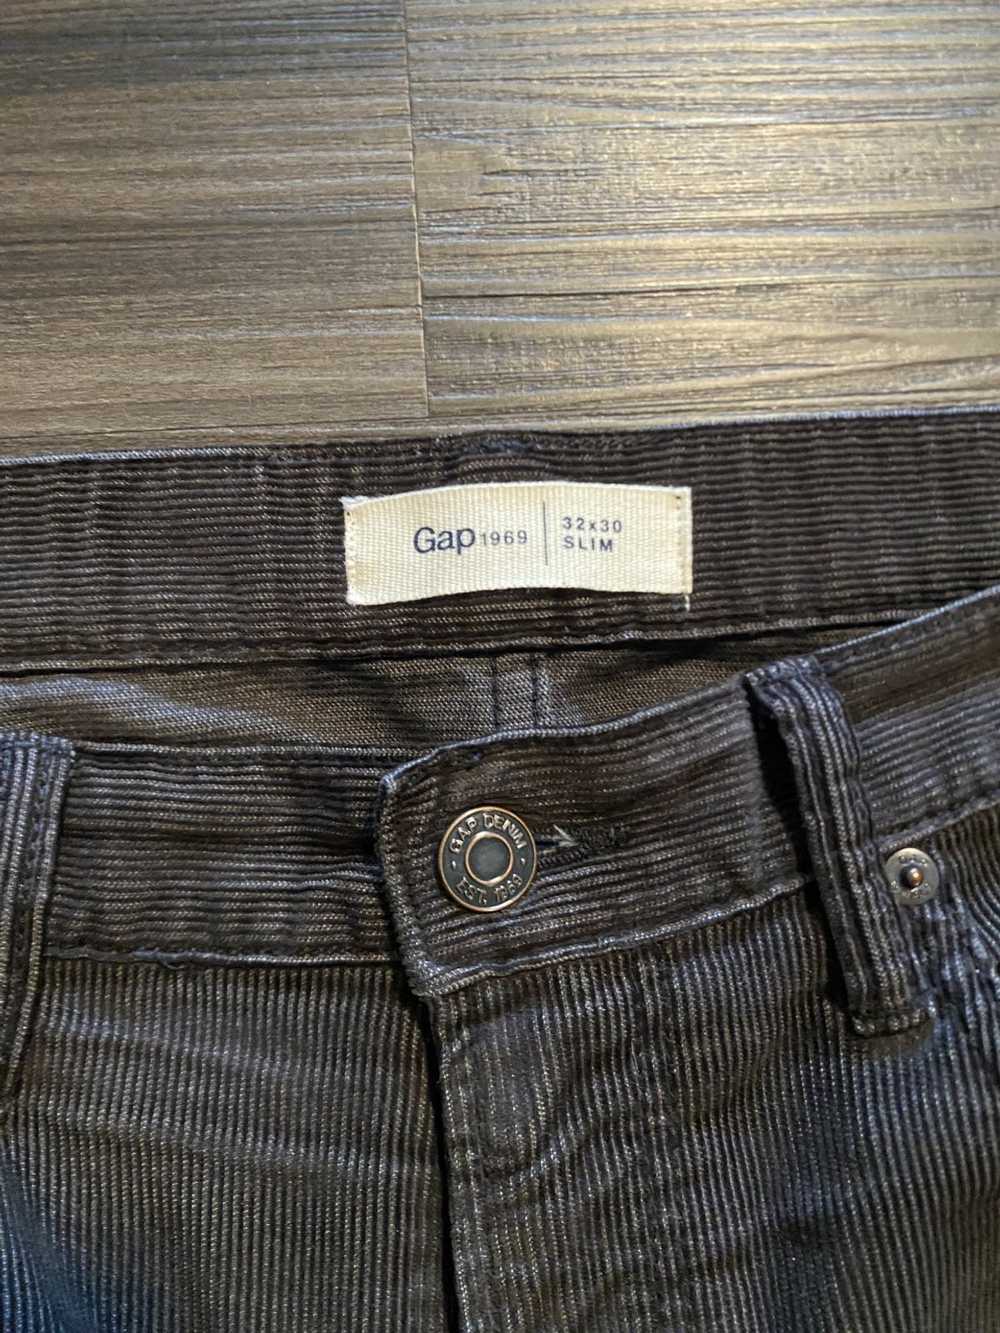 Gap Gap 1969 vintage pants *Barely Worn* - image 3